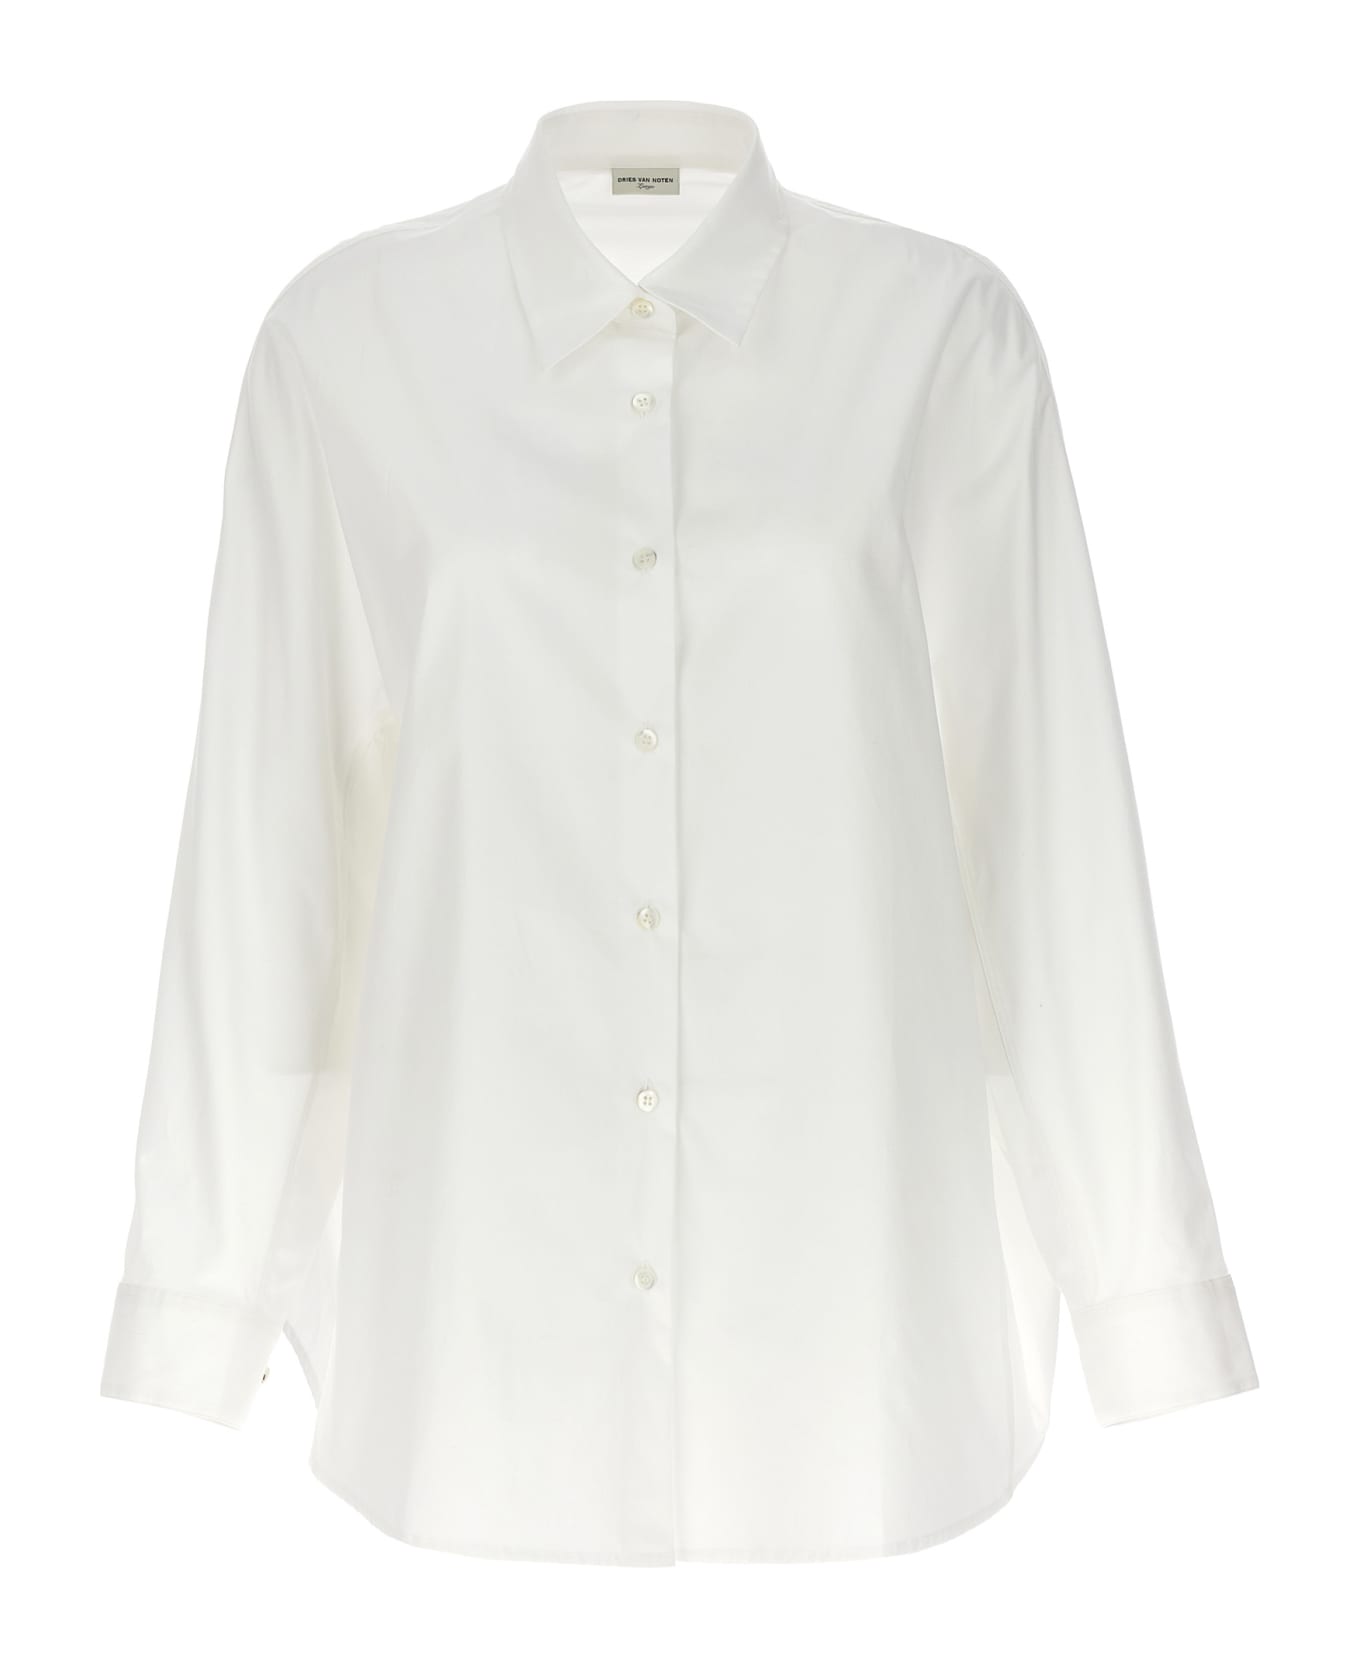 Dries Van Noten 'casio' Shirt - White シャツ